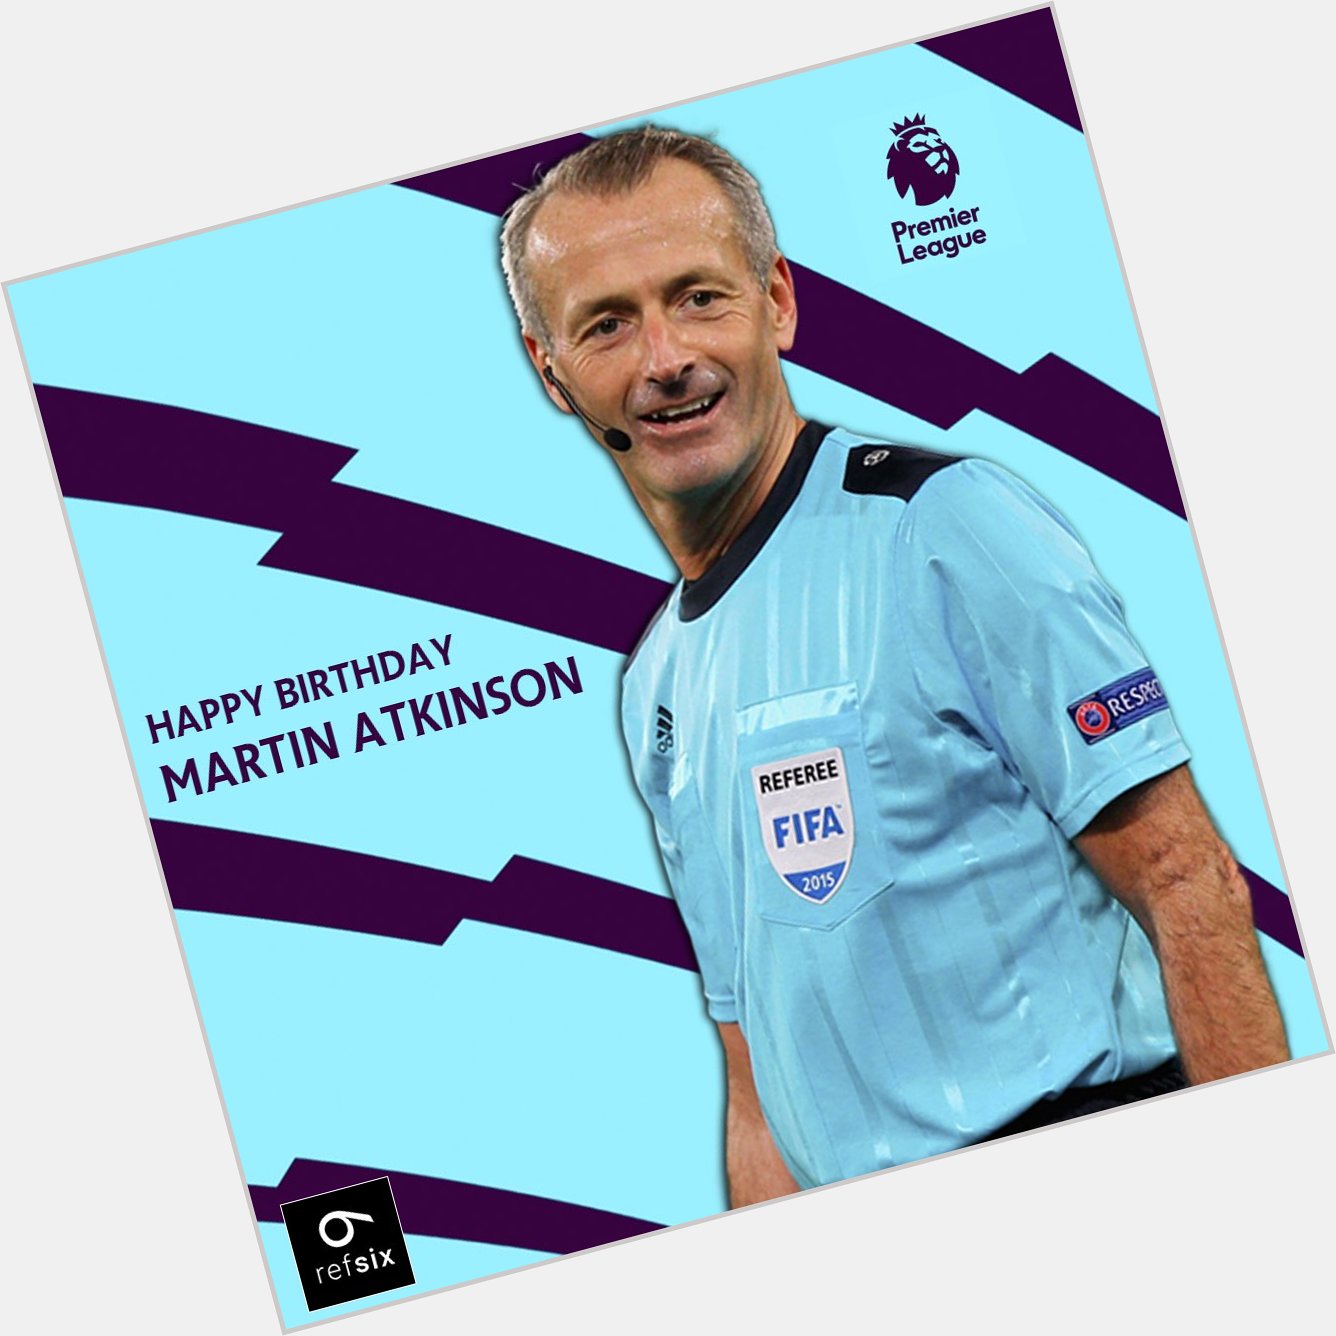 Happy Birthday to Premier League and FIFA referee Martin Atkinson  